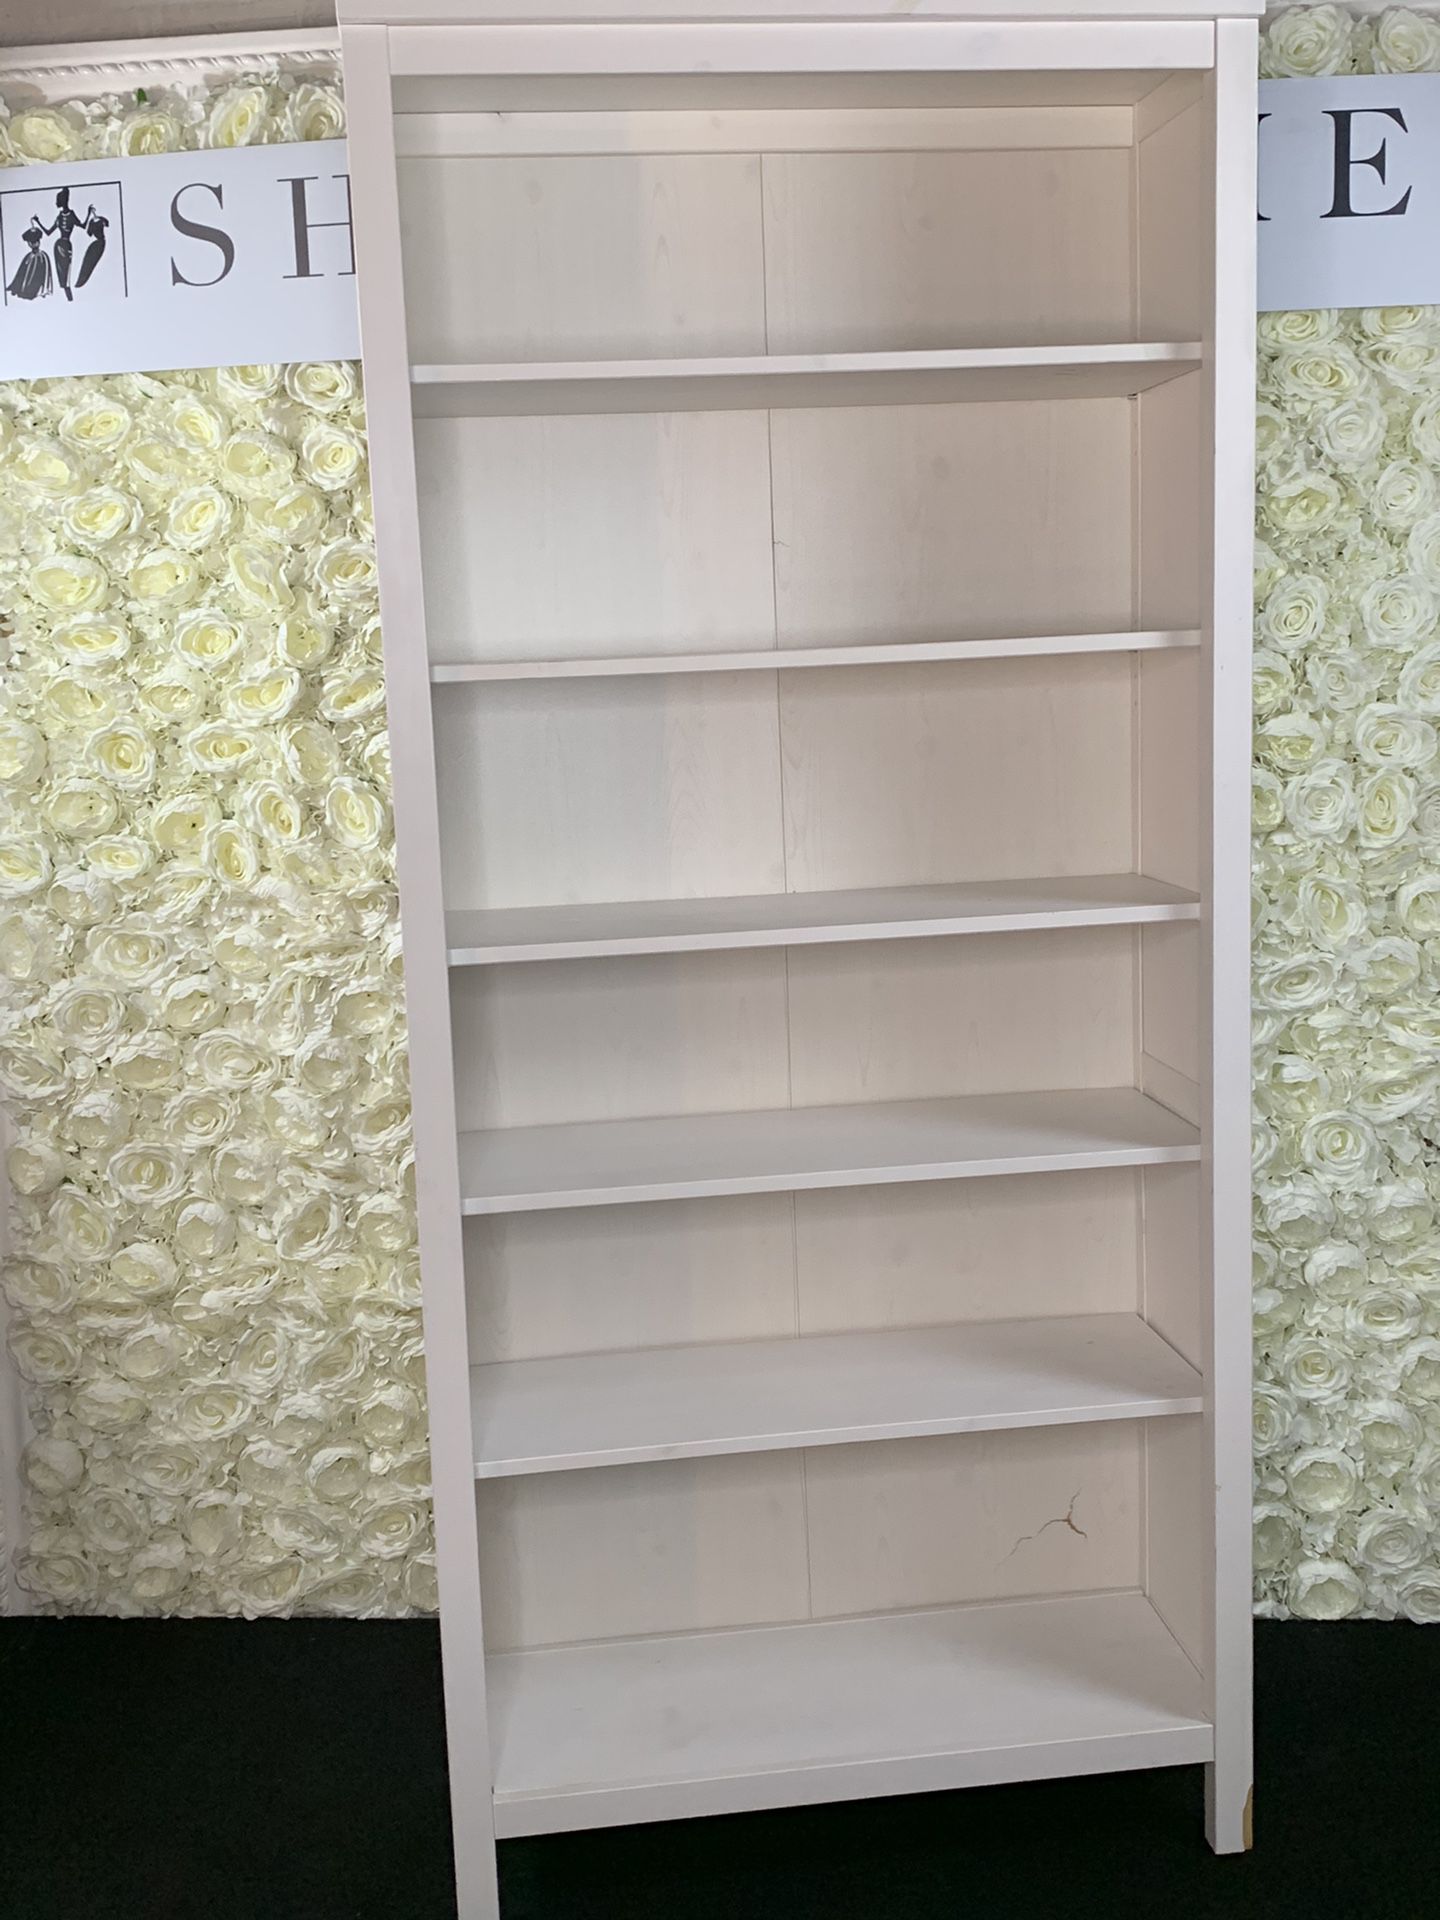 FLASH SALE: 6.5ft Cream/Off-White 6 Level Shelf